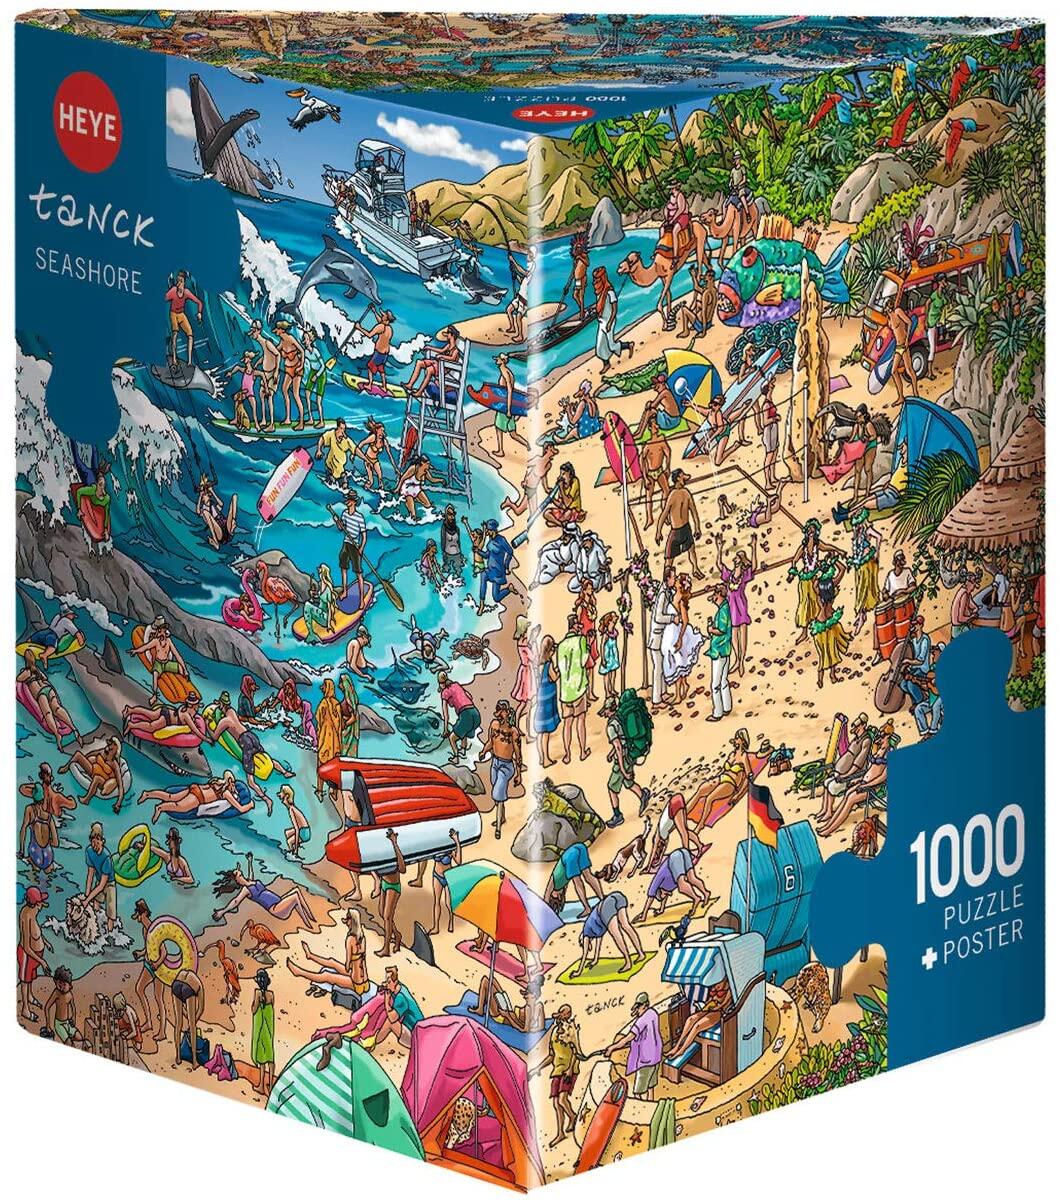 HEYE Puzzle 1000 Teile Tanck Seashore - www.kinderkram-direkt.de